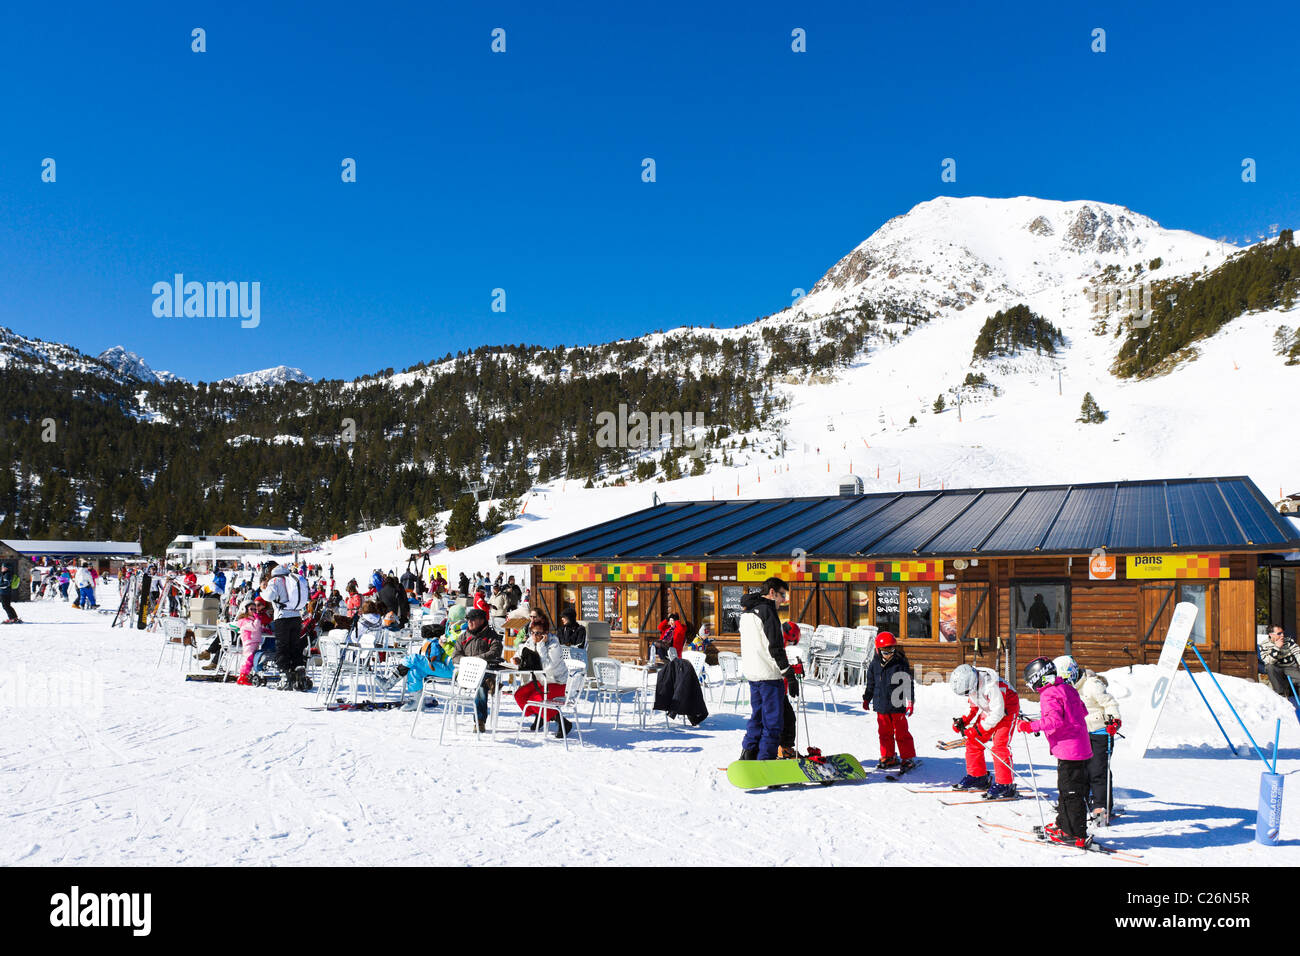 Cafe at the bottom of the slopes at Grau Roig, Pas de la Casa, Grandvalira Ski Area, Andorra Stock Photo